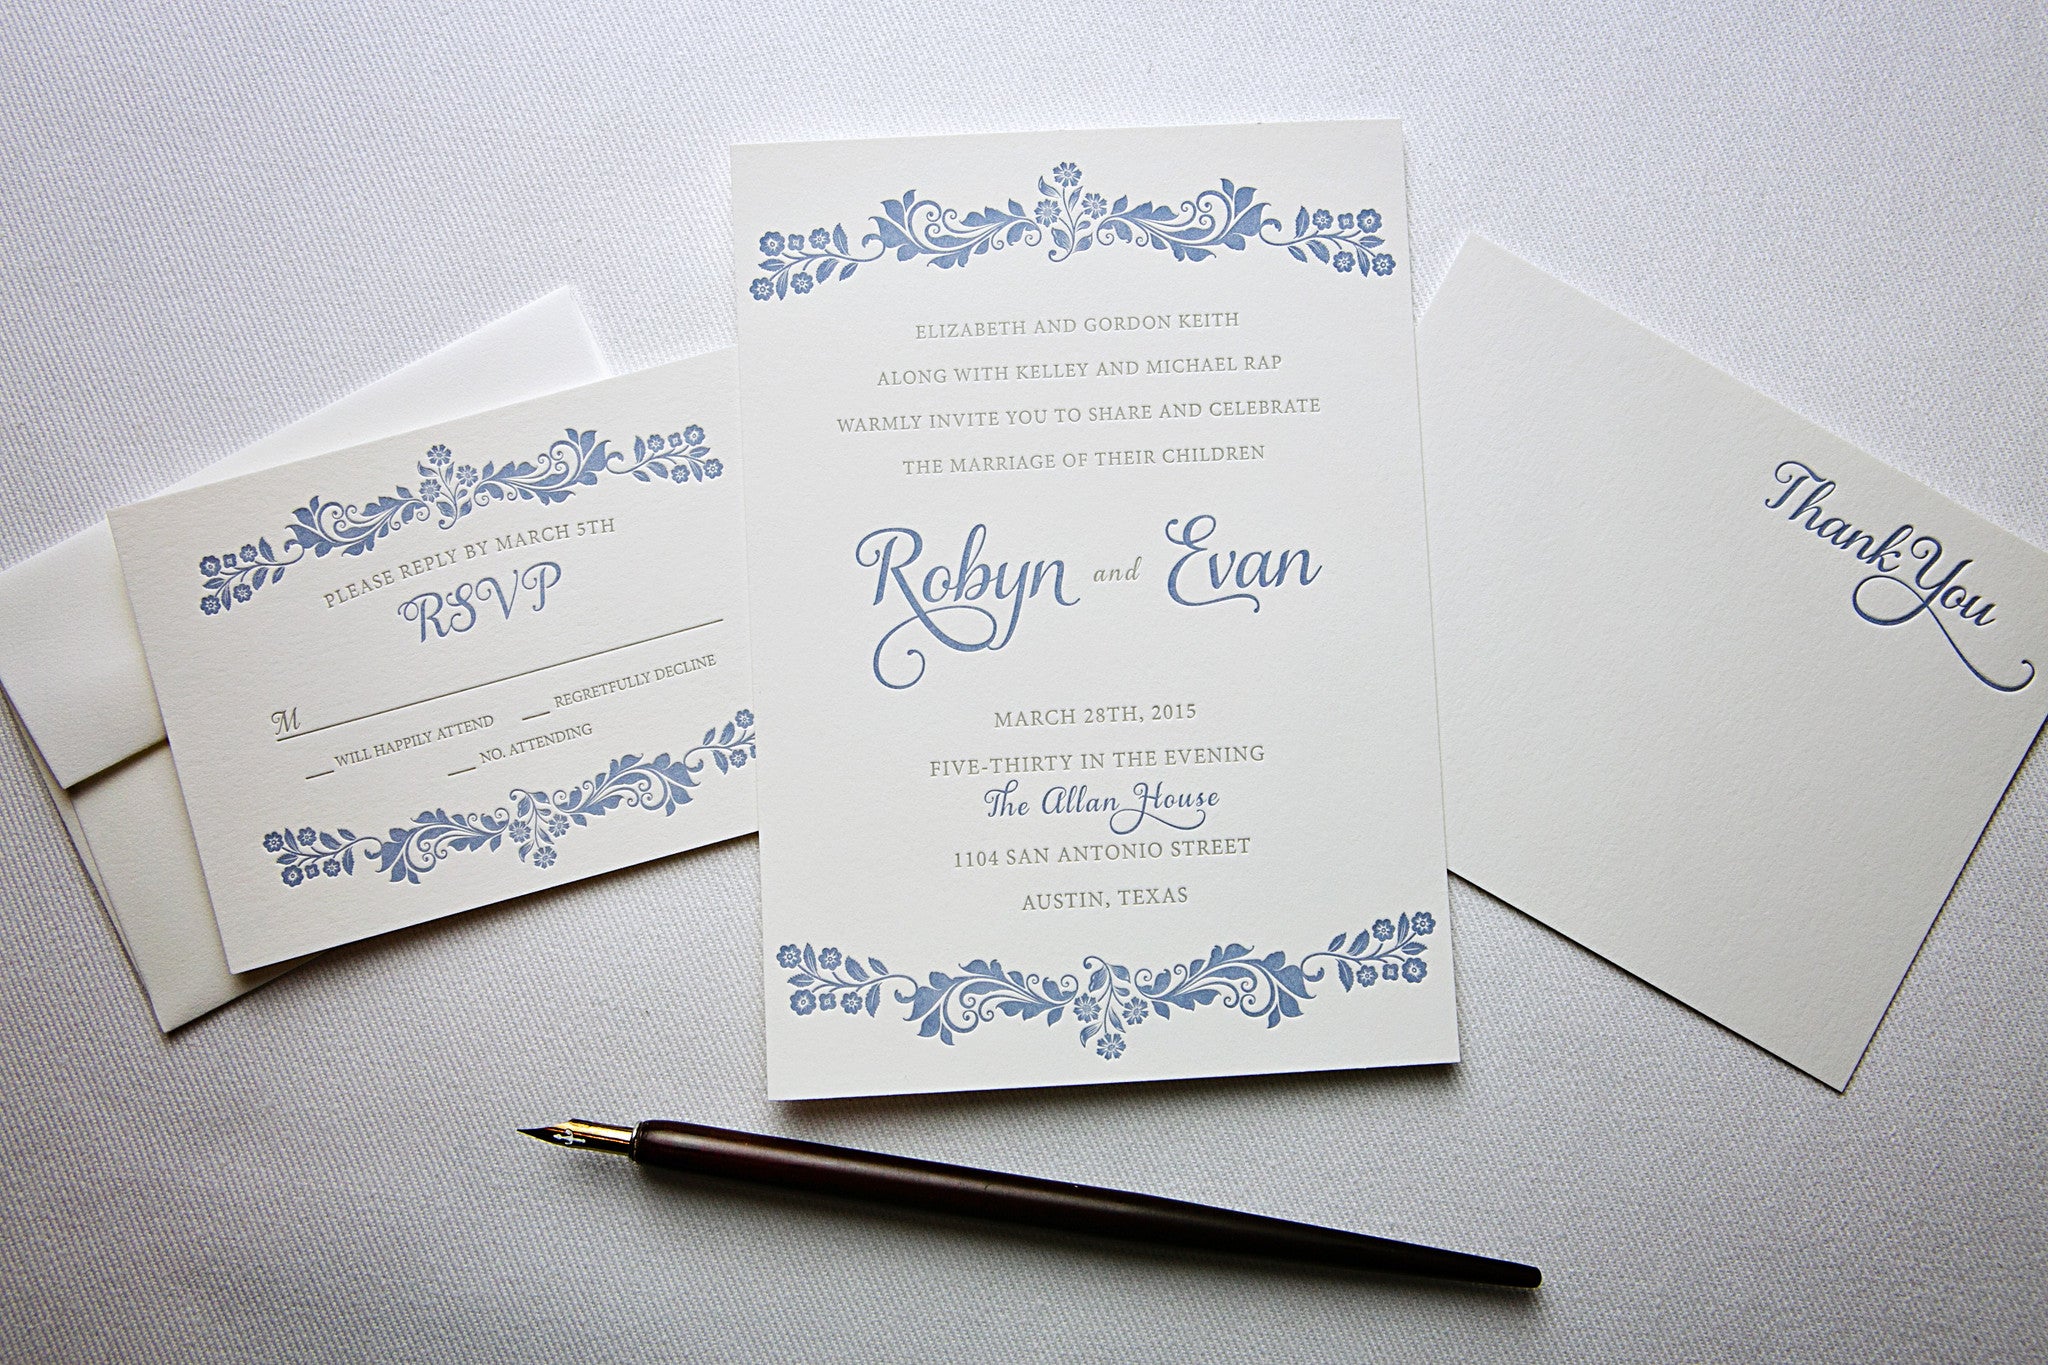 Custom Letterpress Wedding Invitations - Percolator Letterpress Co.